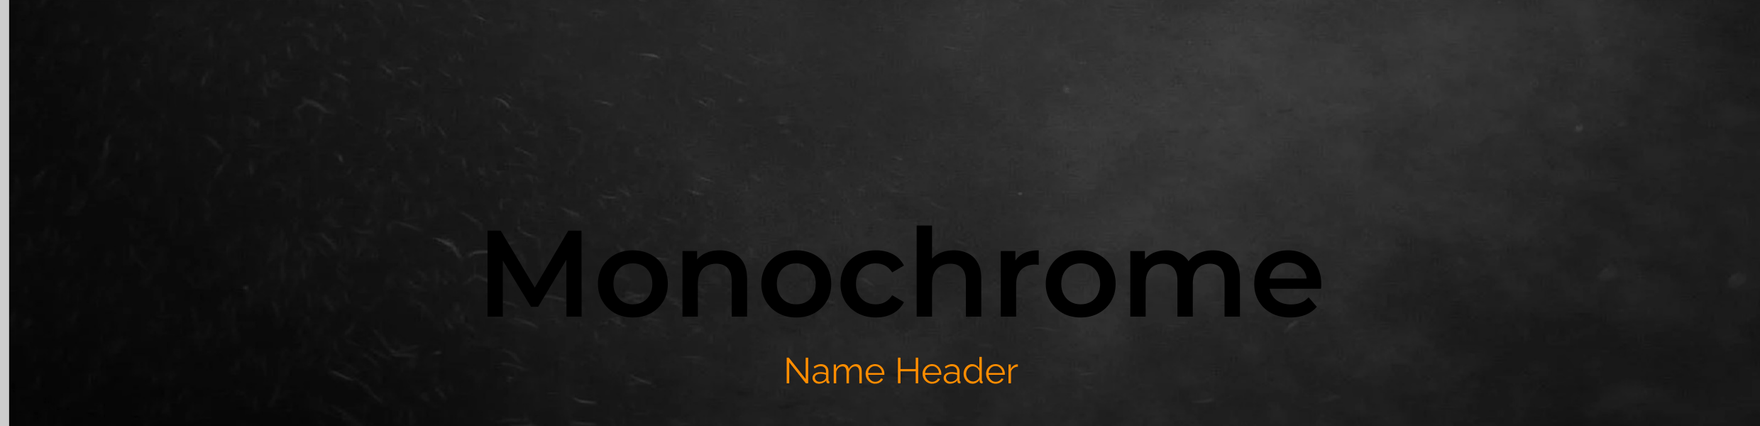 Monochrome Name Header Template